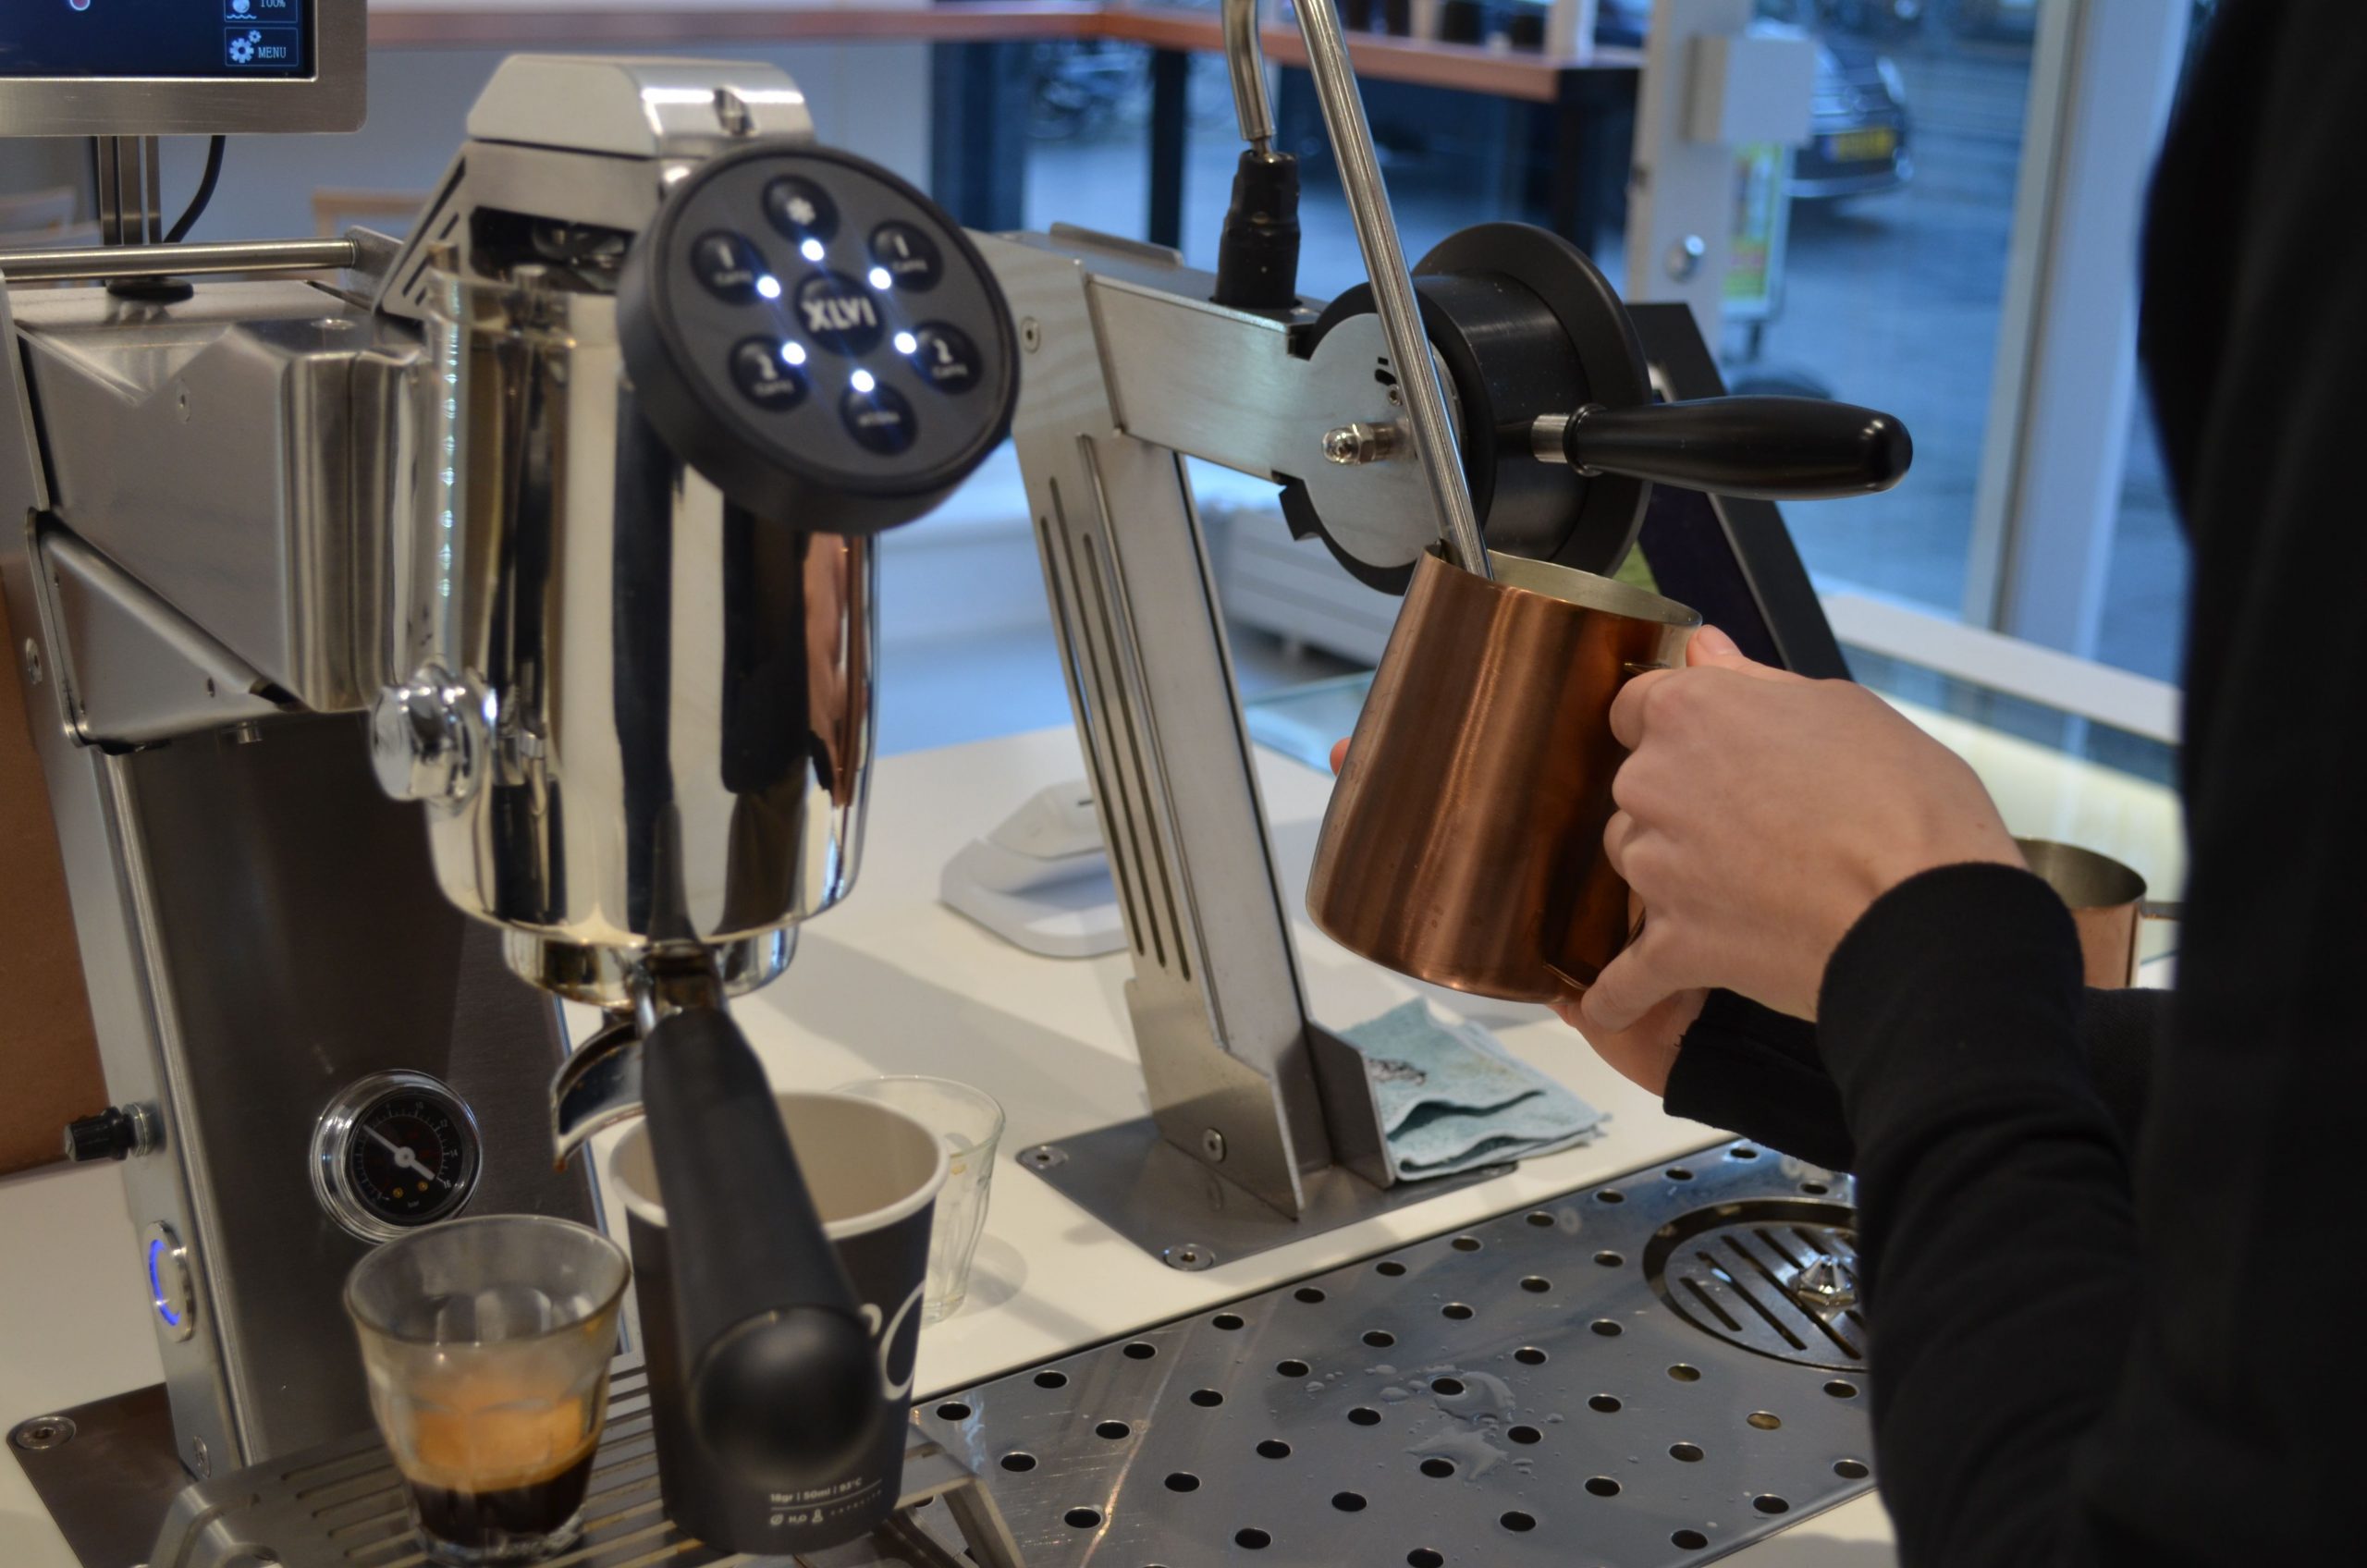 Espressobar Amsterdam, coffee machine in use